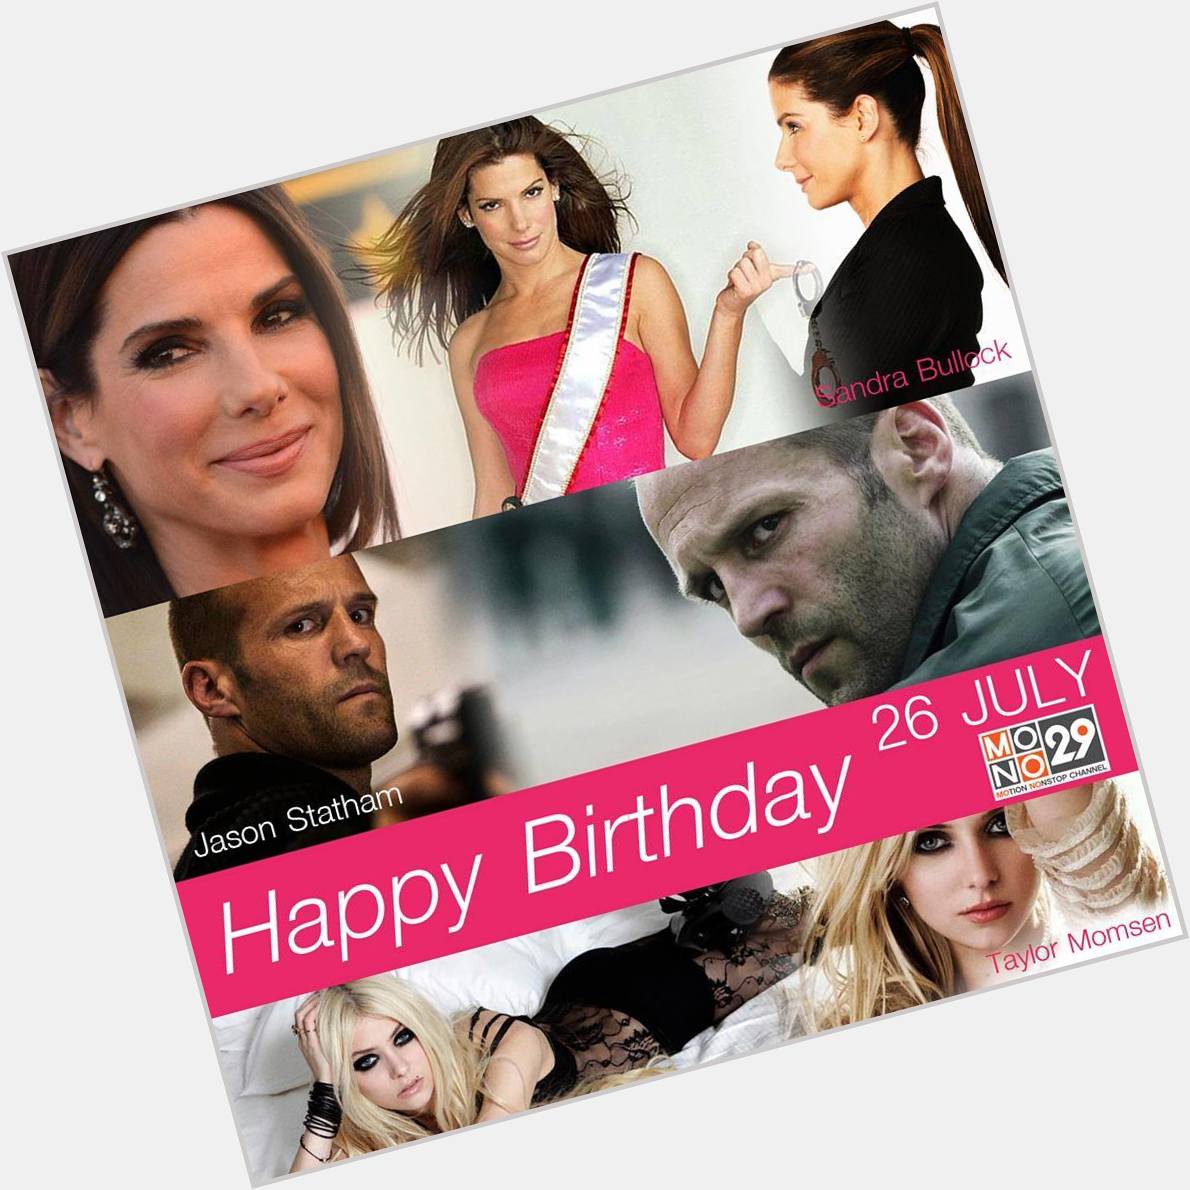 26 July Happy Birthday
- Sandra Bullock 
- Jason Statham
- Taylor Momsen 